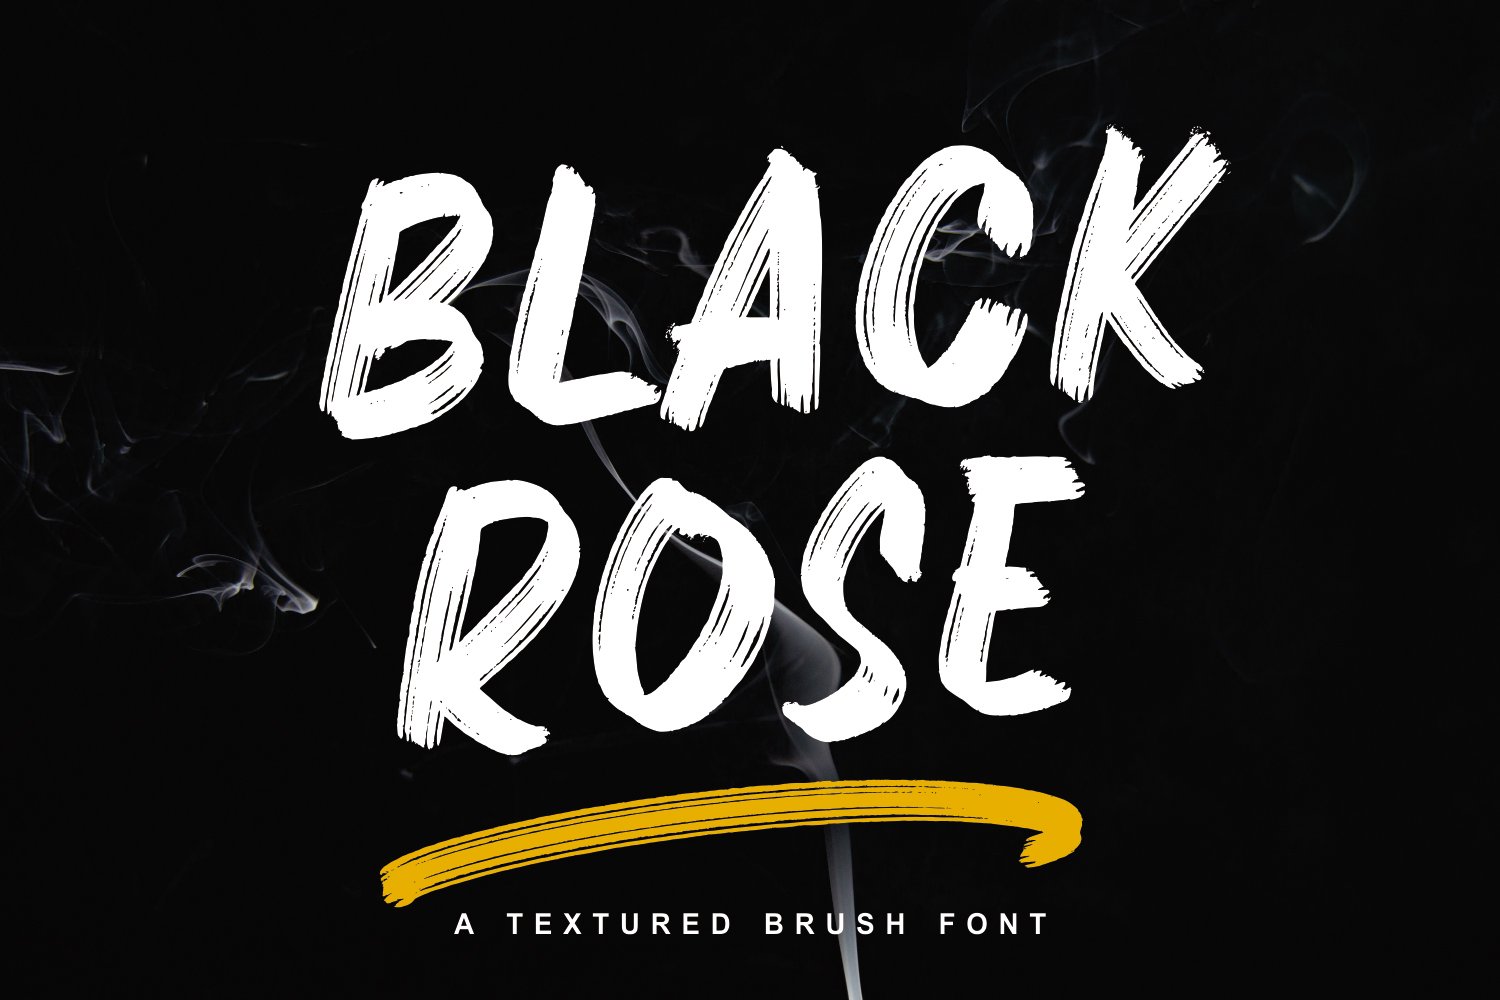 Blackrose cover image.